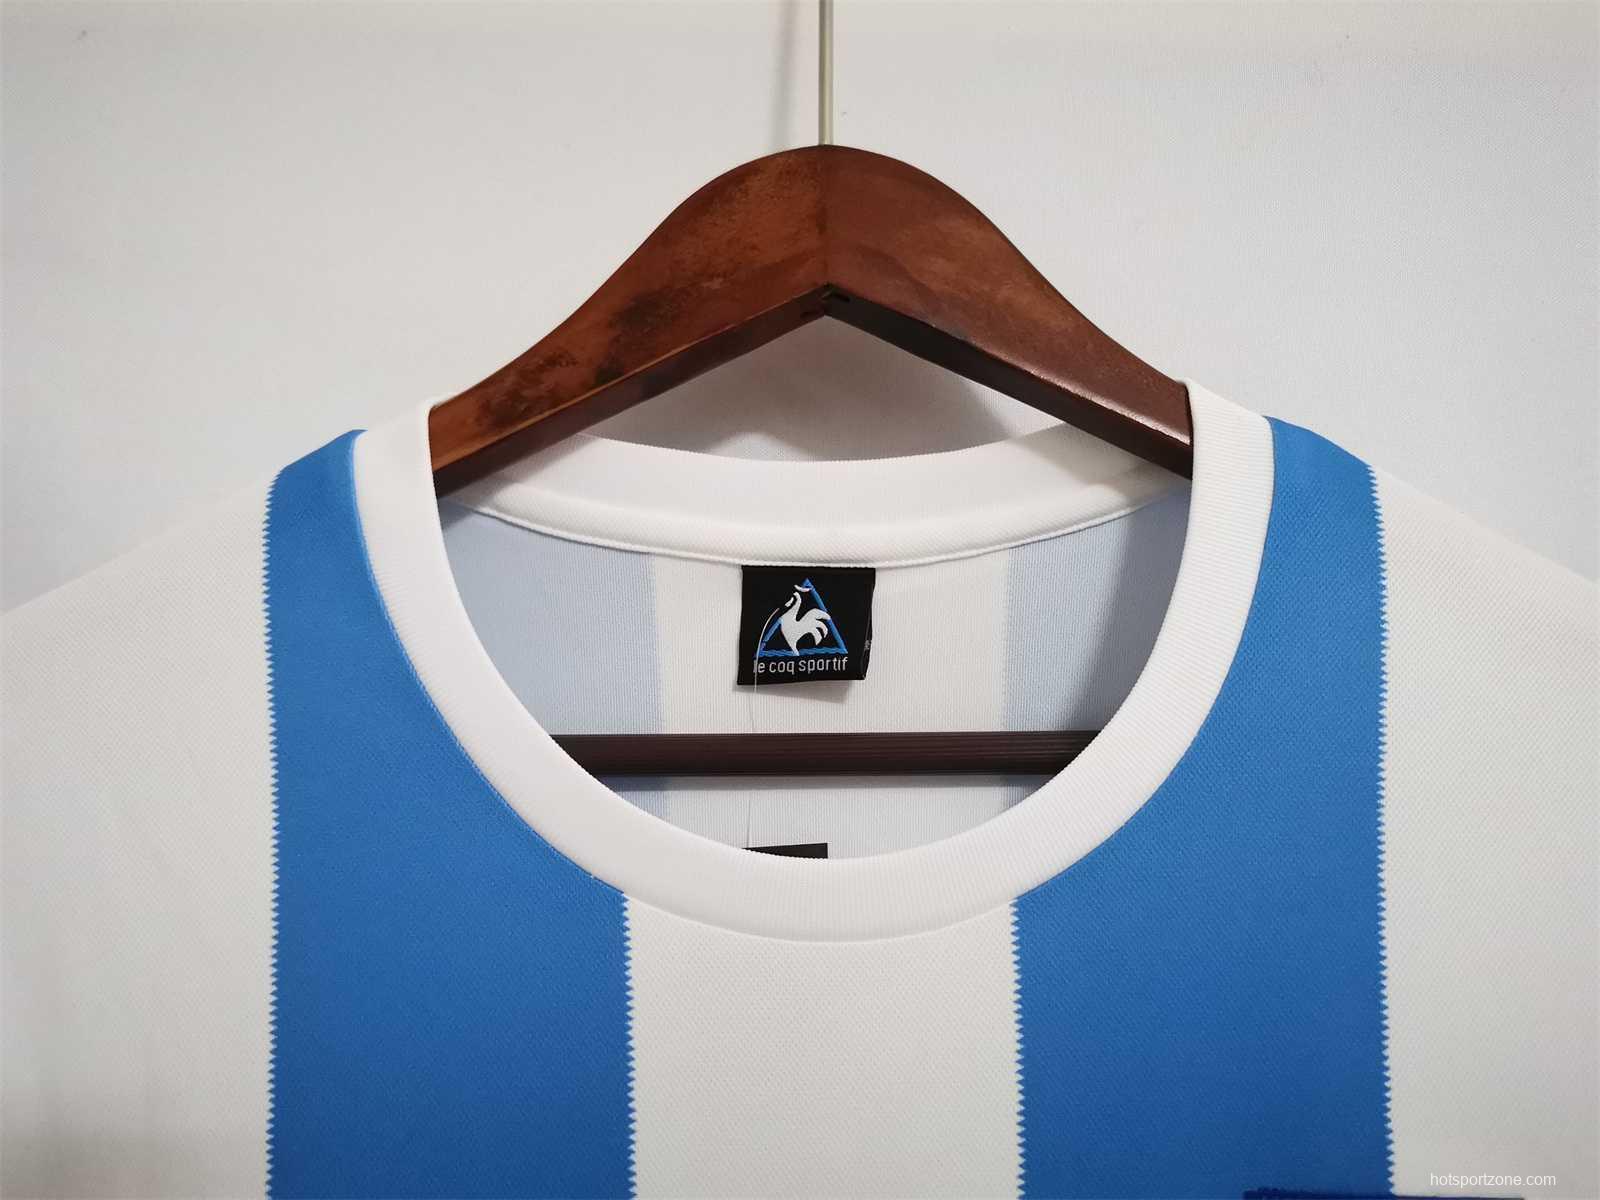 Retro 1986 Argentina Home Long Sleeve Jersey